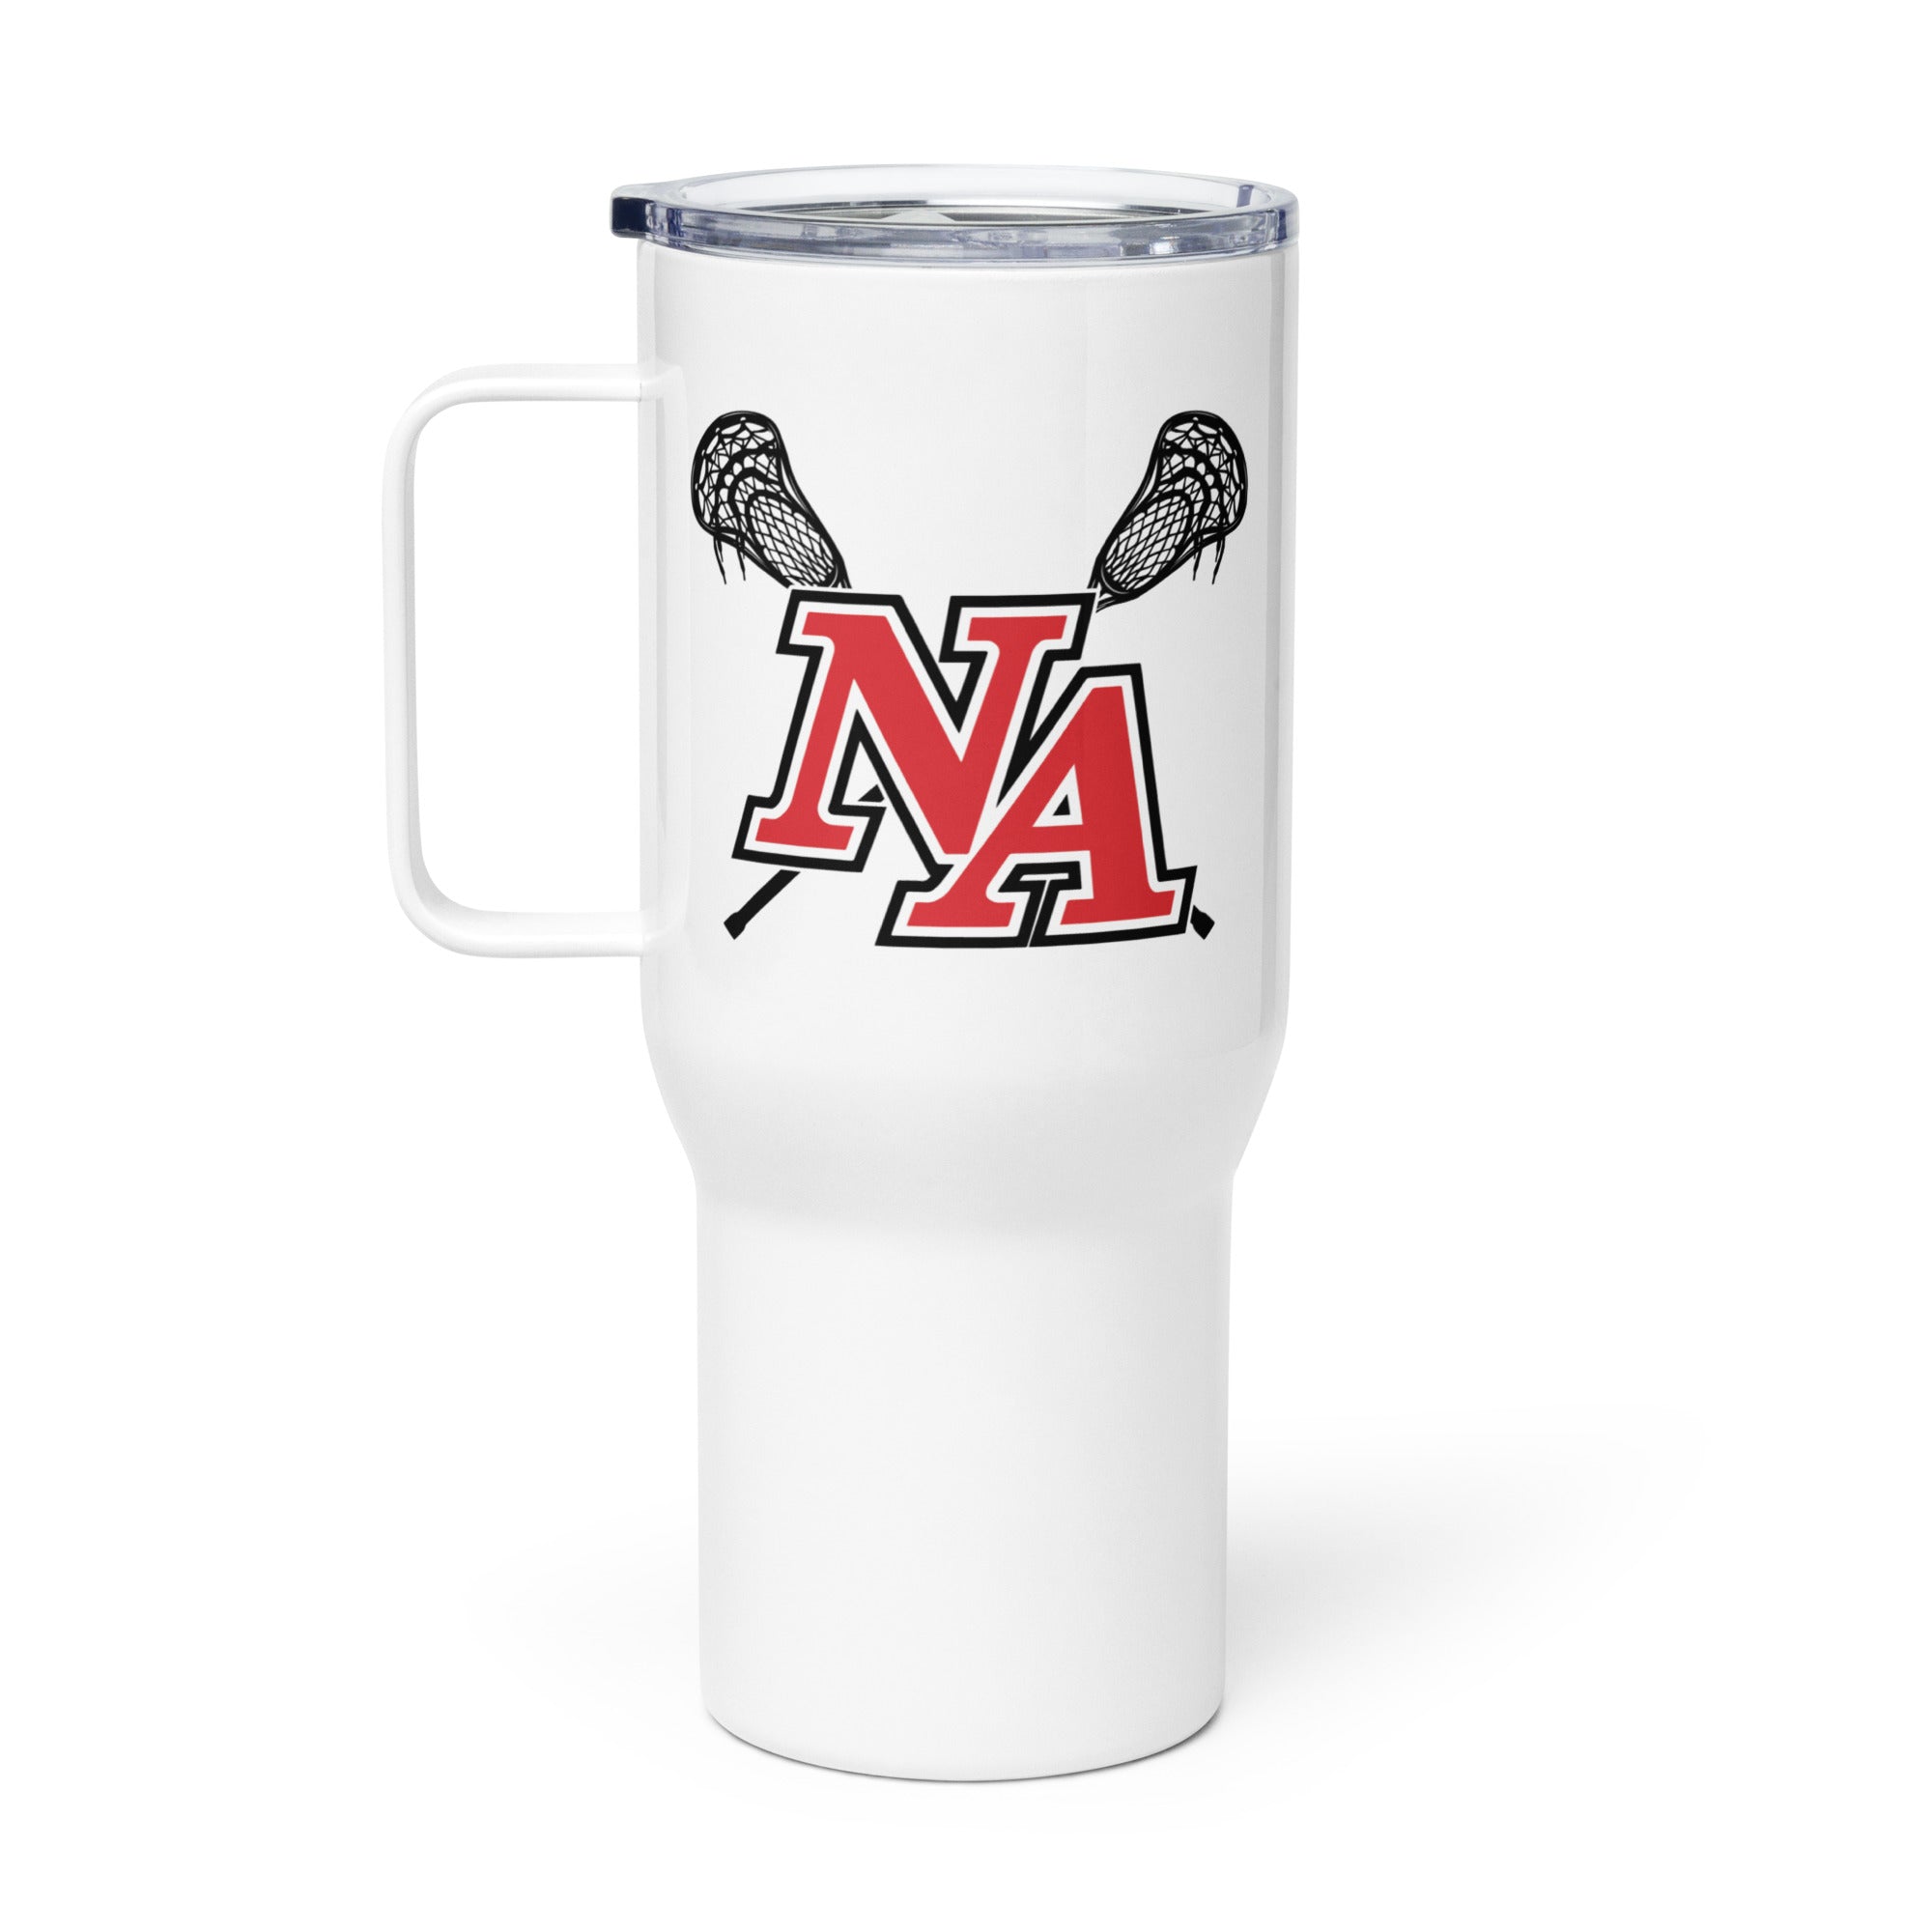 North Andover Travel mug with a handle